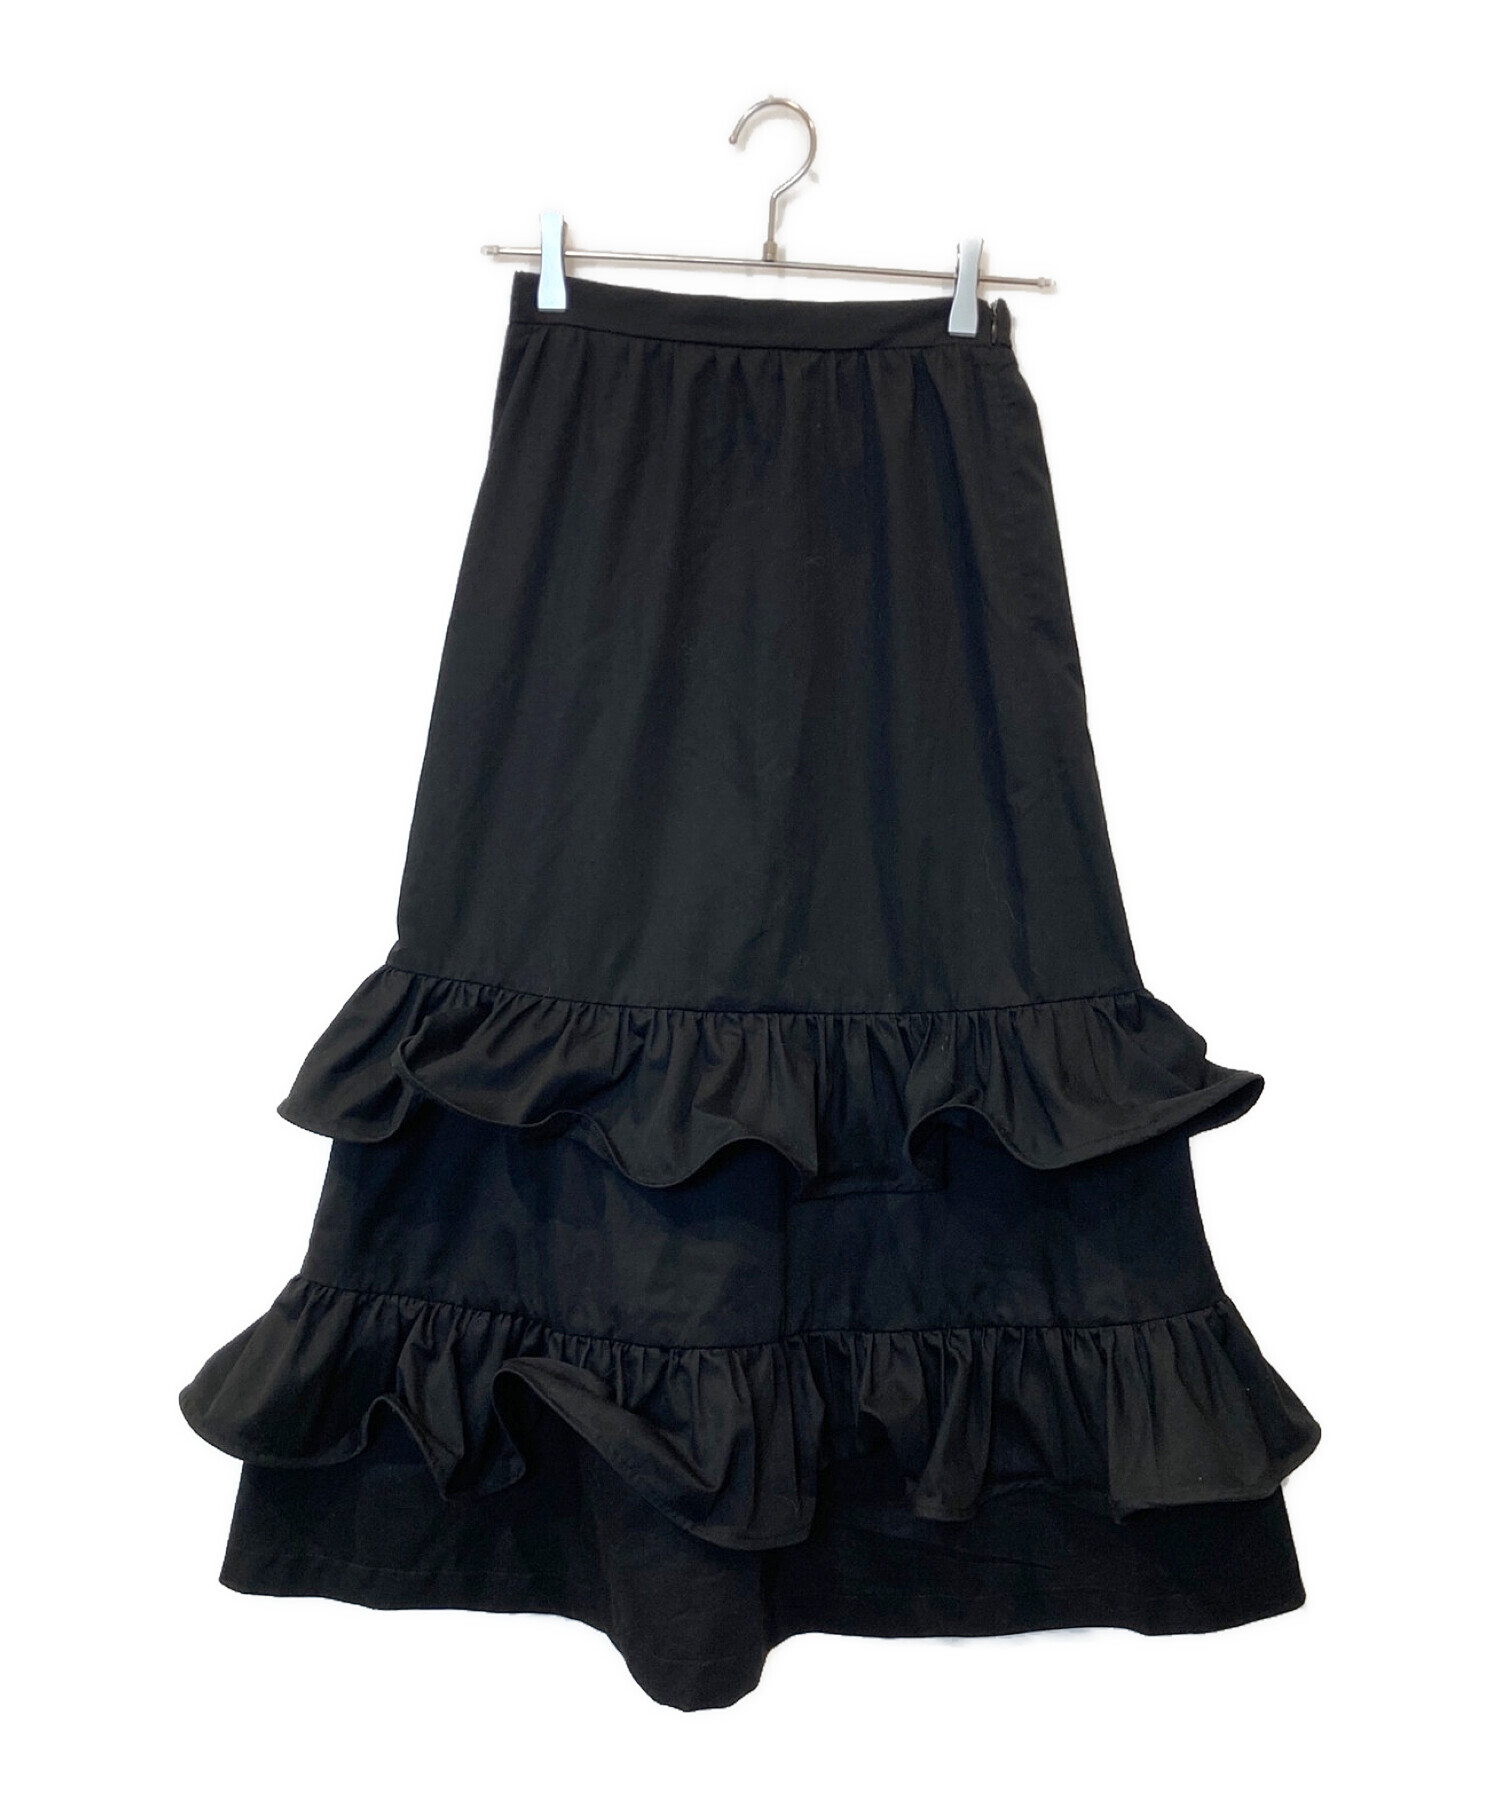 Honey mi Honey (ハニーミーハニー) wire frill cotton long skirt / フリルスカート ブラック  サイズ:FREE